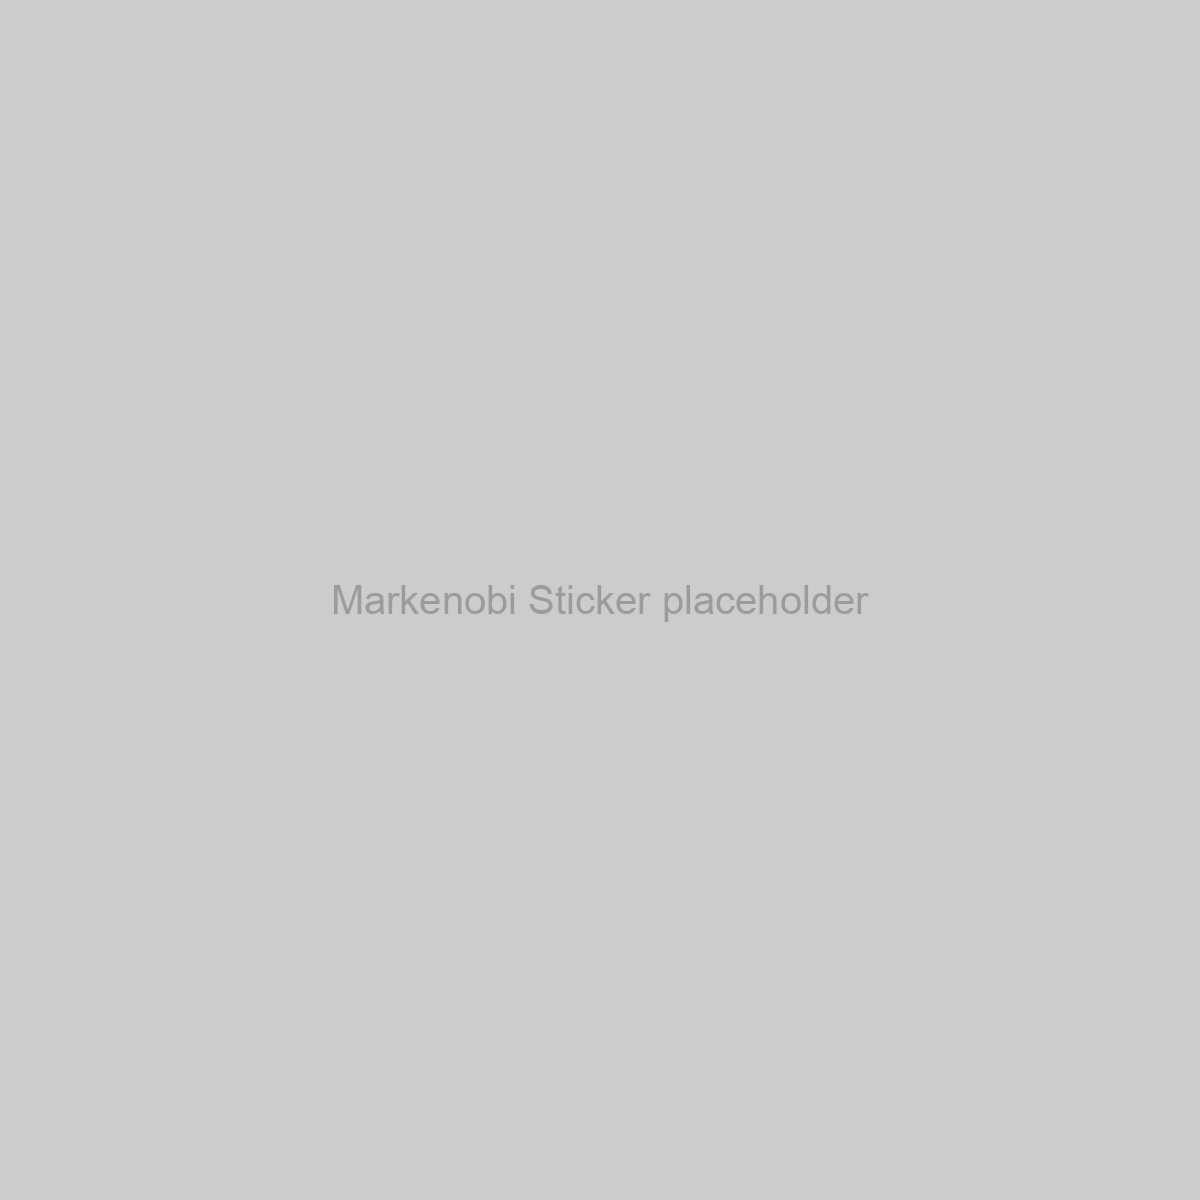 Markenobi Sticker Placeholder Image